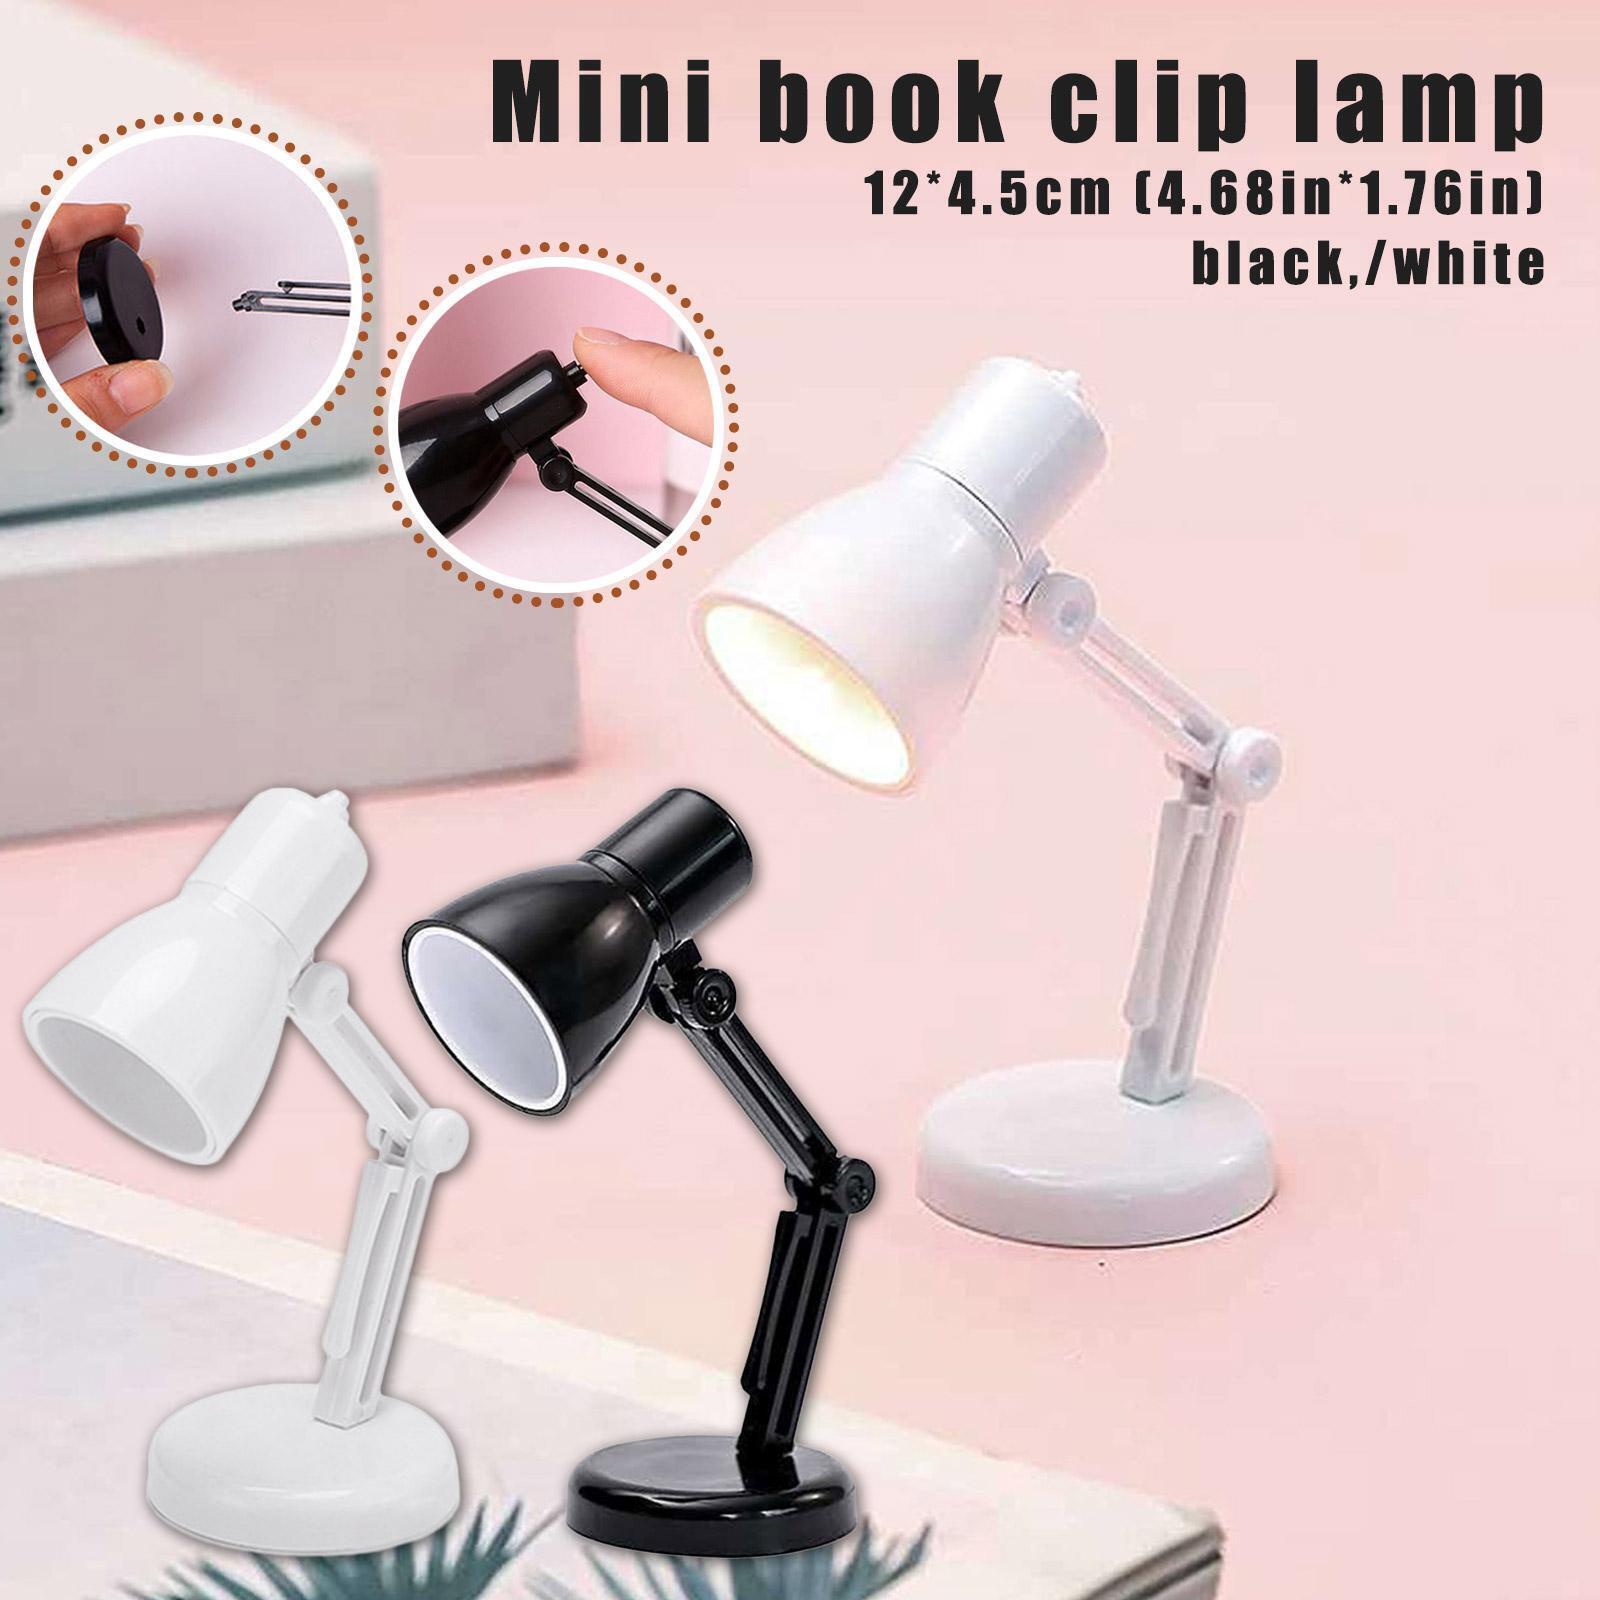 Exotic Creative Small Book Lamp Bedroom Small Night Lamp Mini Book Clip Lamp Z8